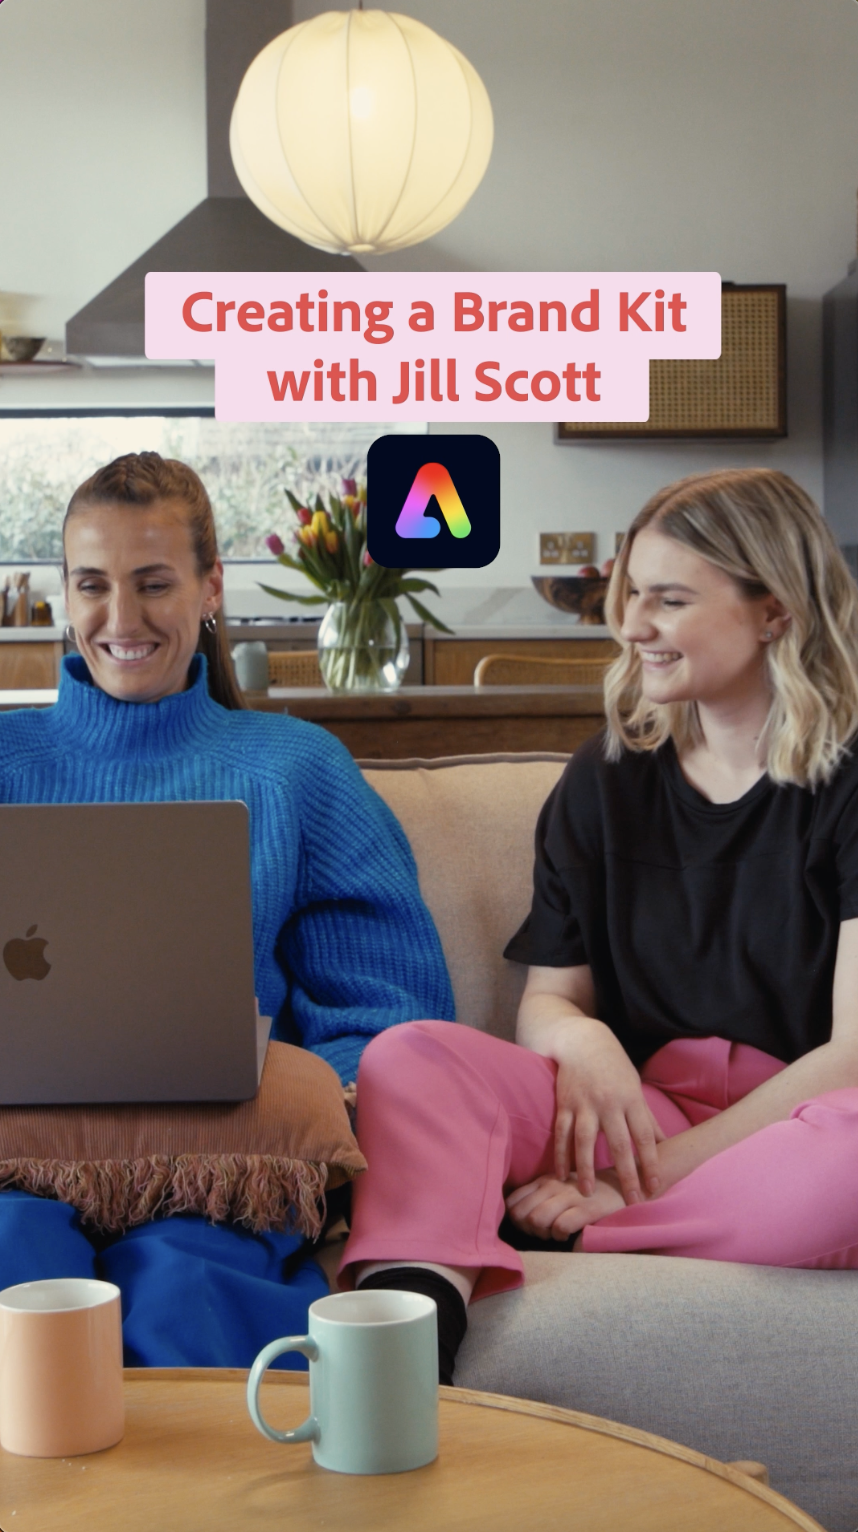 Adobe Express with Jill Scott